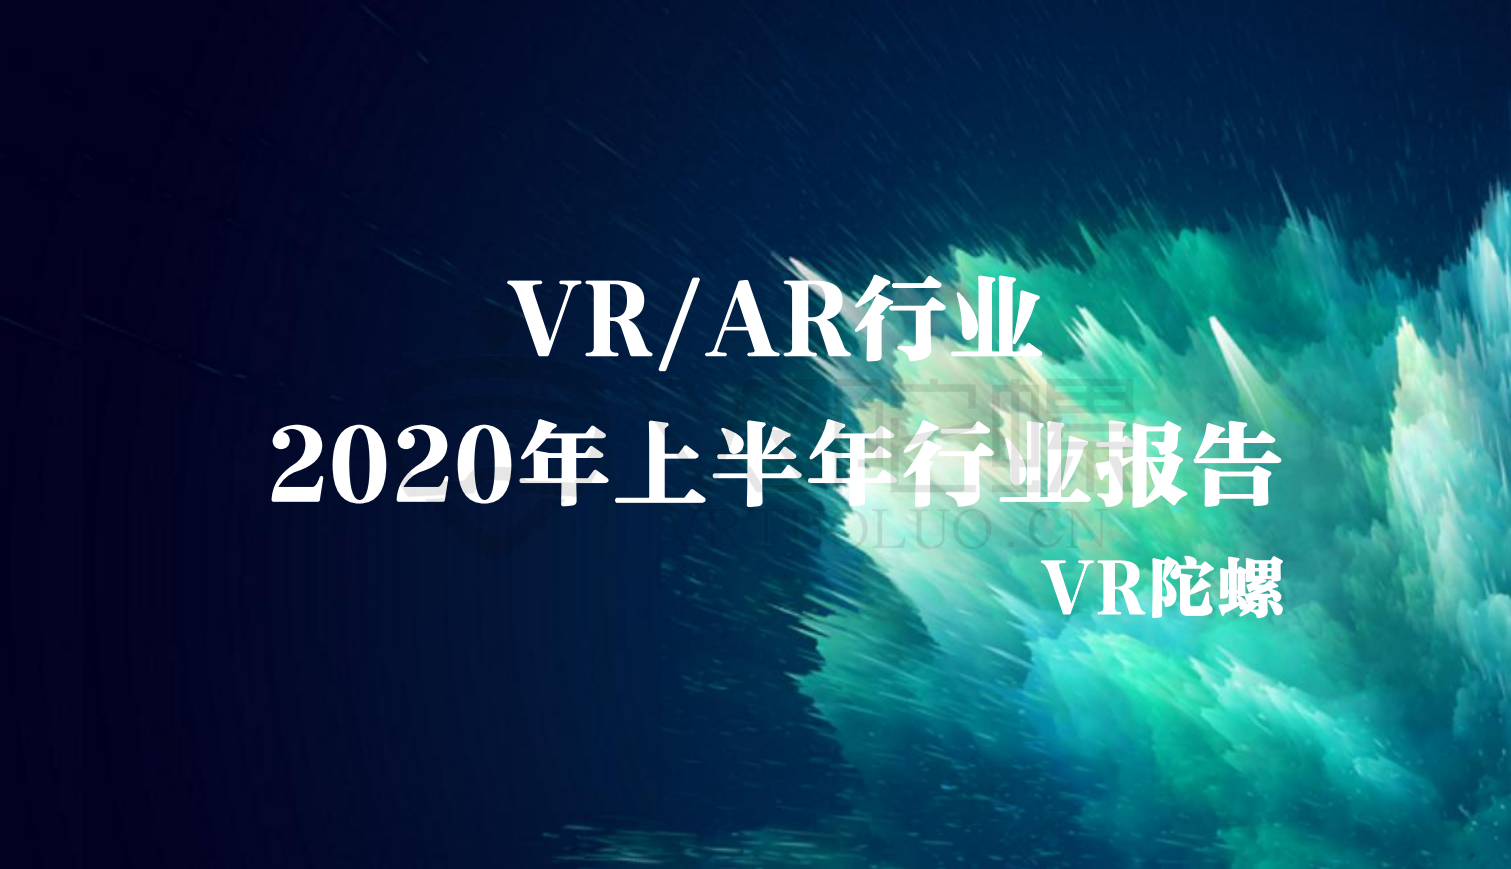 2020年上半年VR/AR行业报告 | VR陀螺